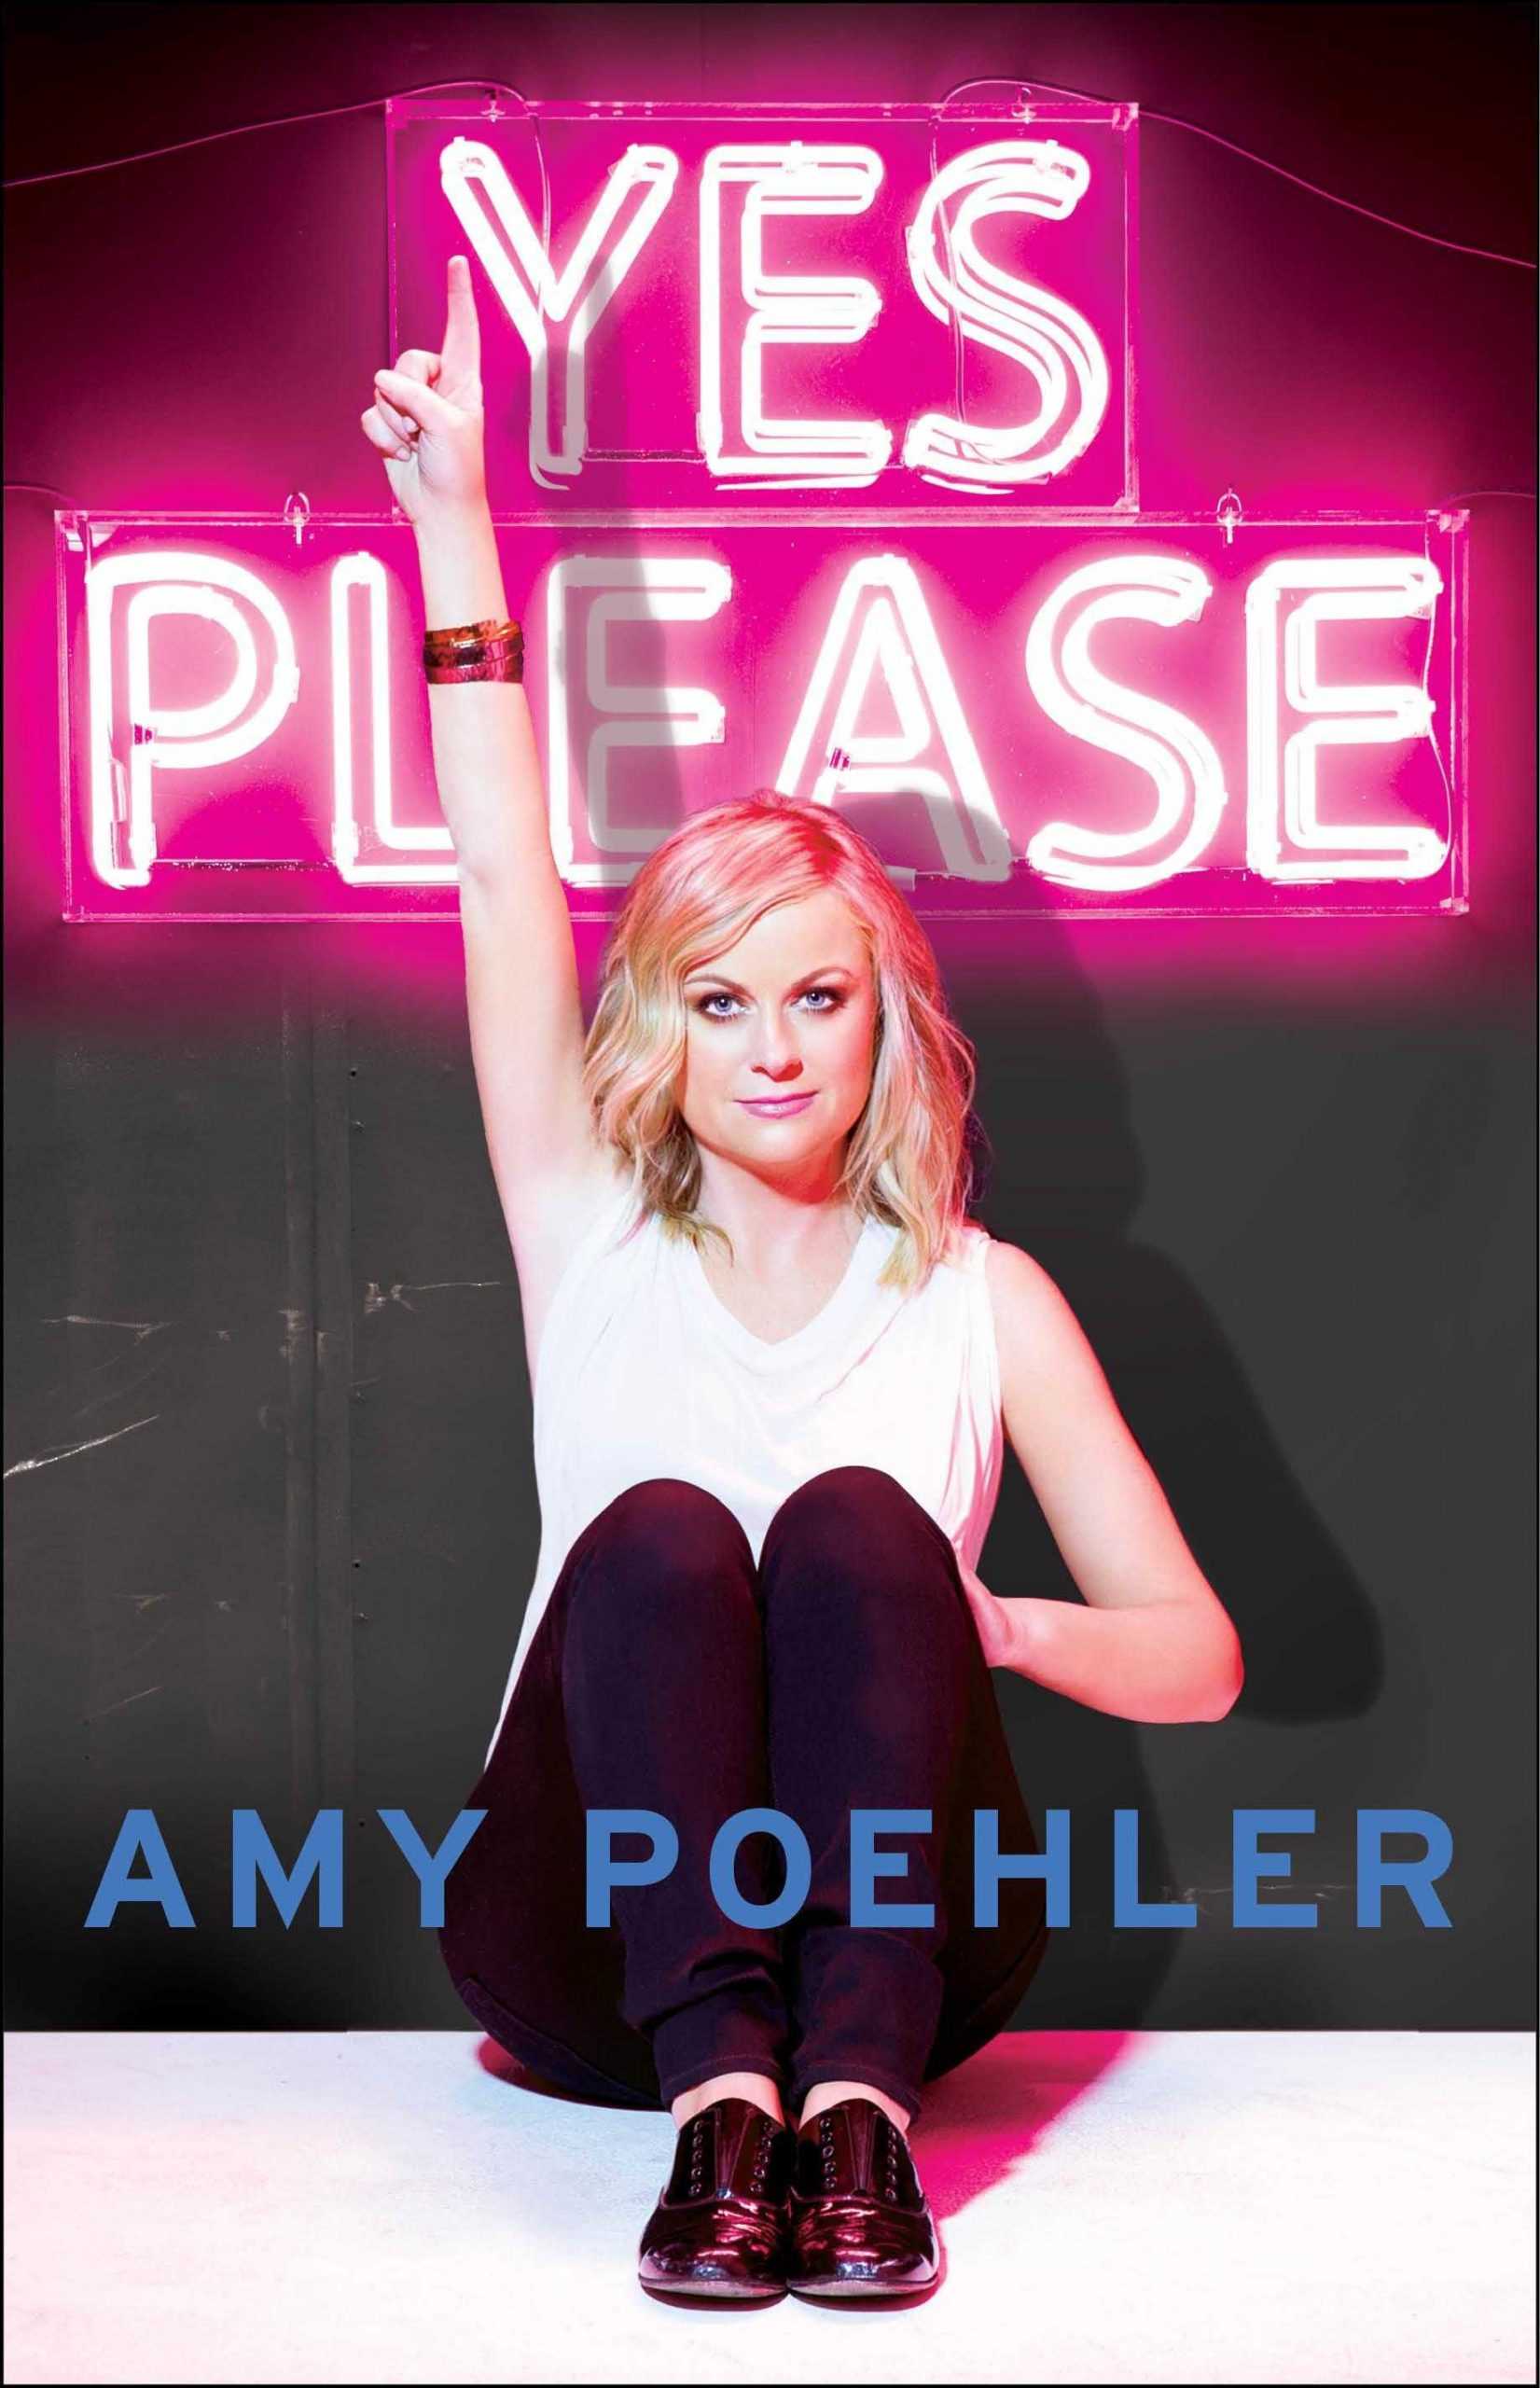 Amy Poehler’s Yes Please